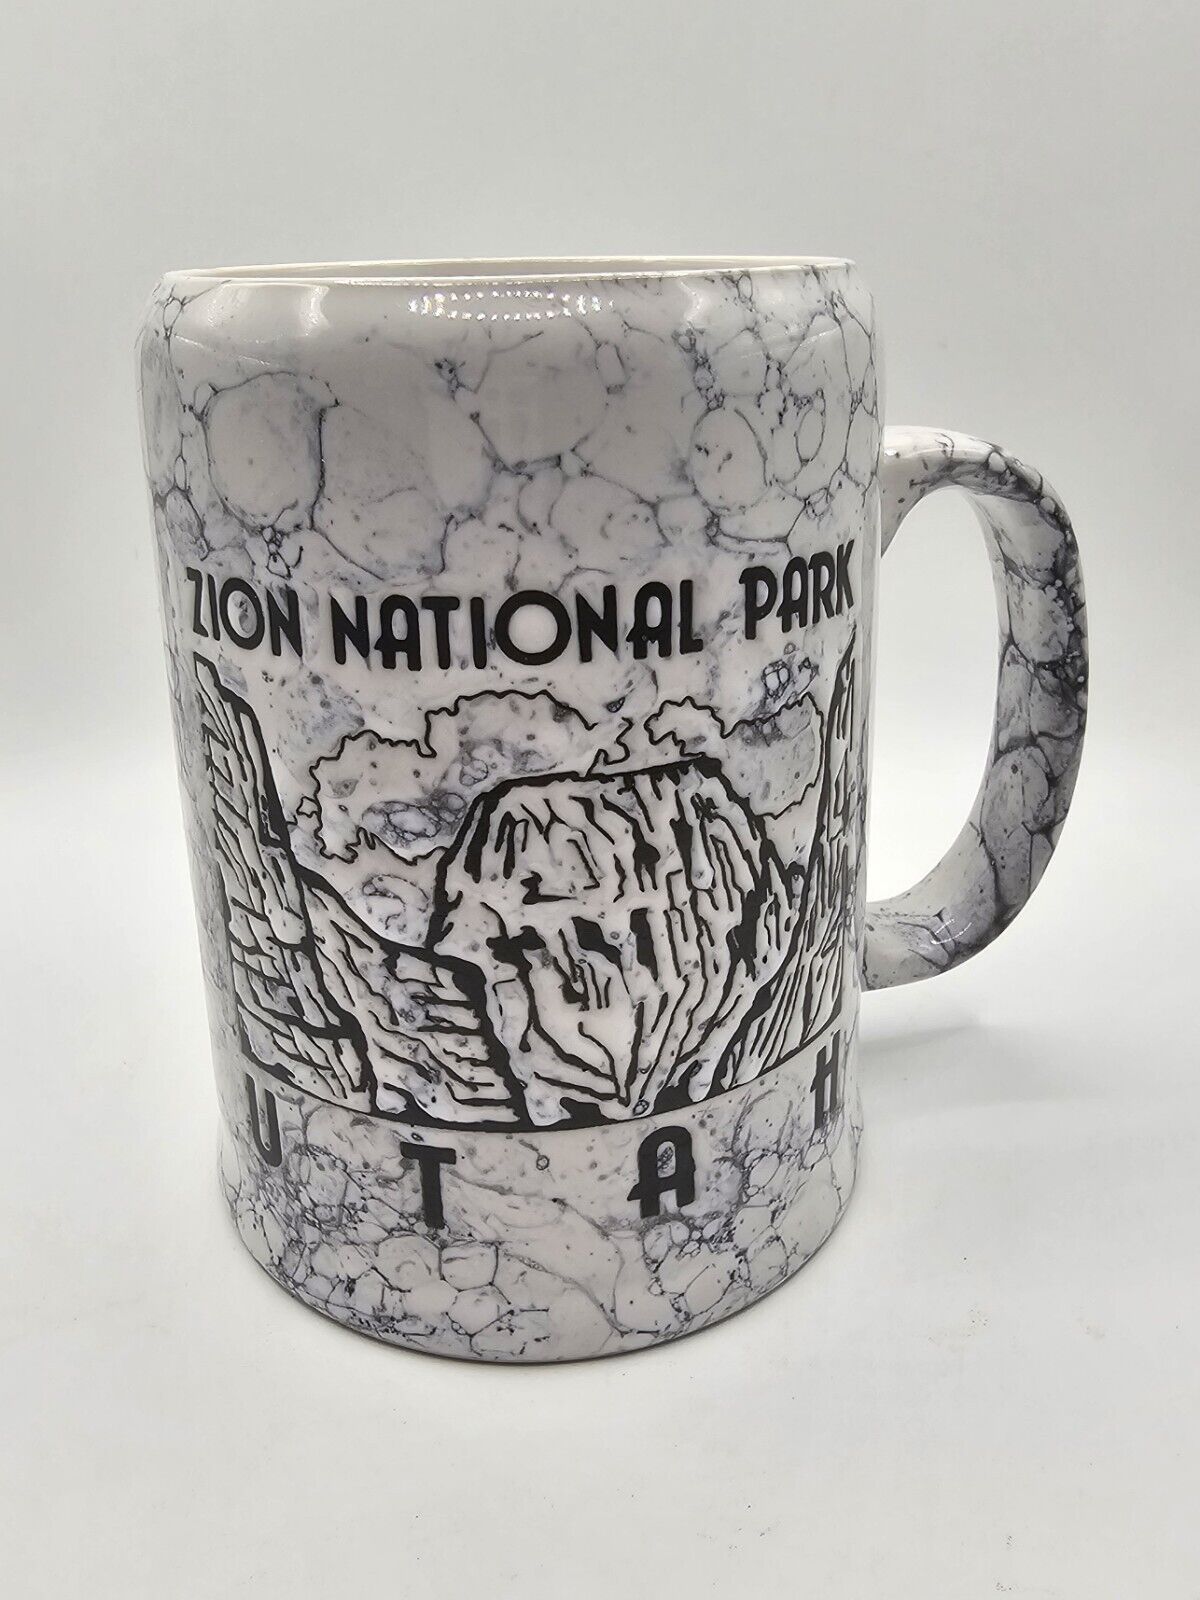 Zion National Park Utah Coffee Mug Black White Crackled Design Ceramic Textured 